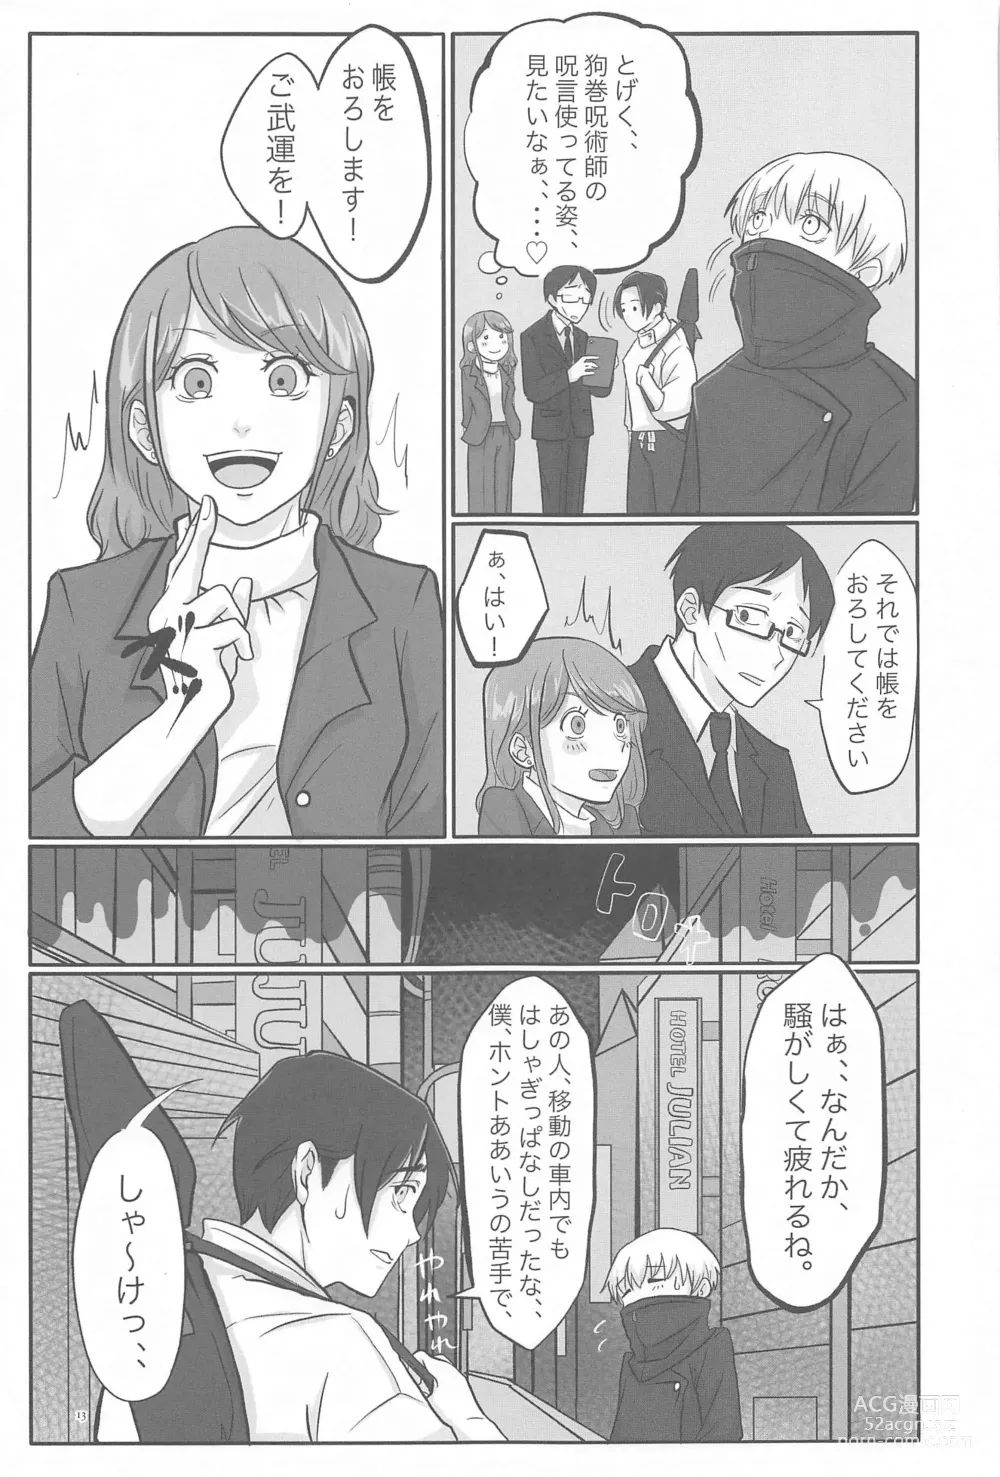 Page 12 of doujinshi Mainichi Mainichi Yume ni Miruhodo